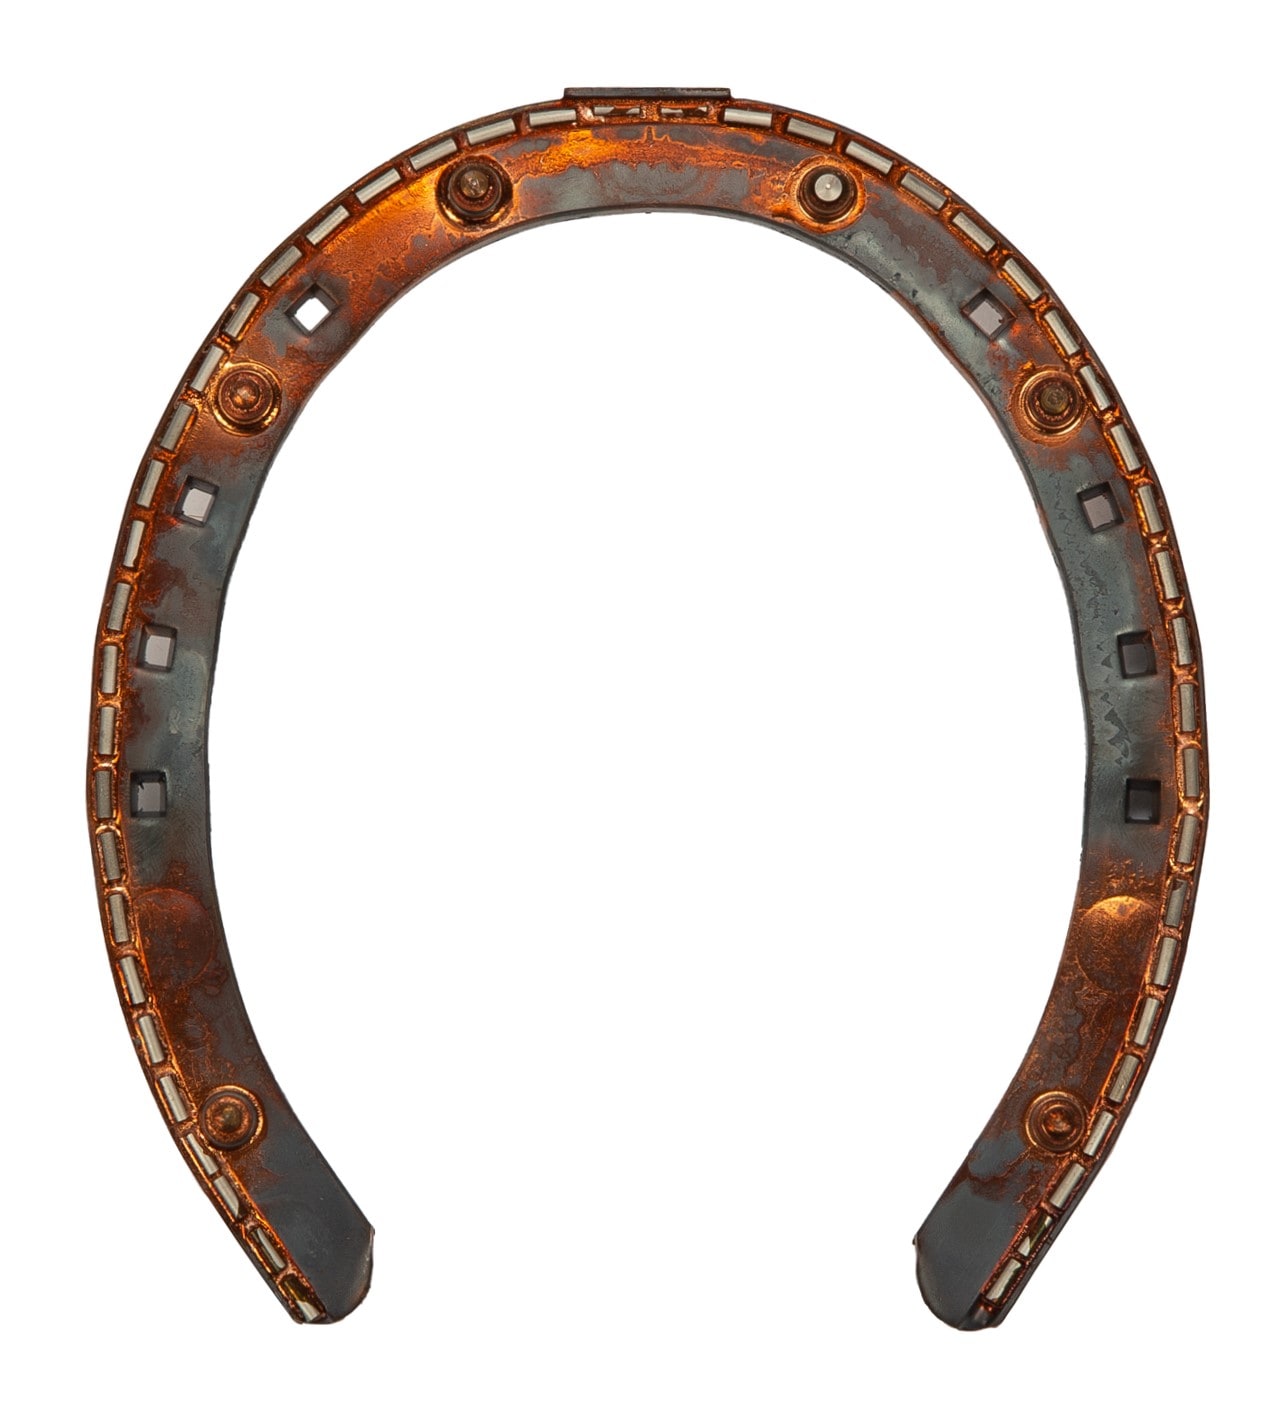 KW Hard metal horseshoe (goldshoe) 15x5, w/ 6 studs (4mm)